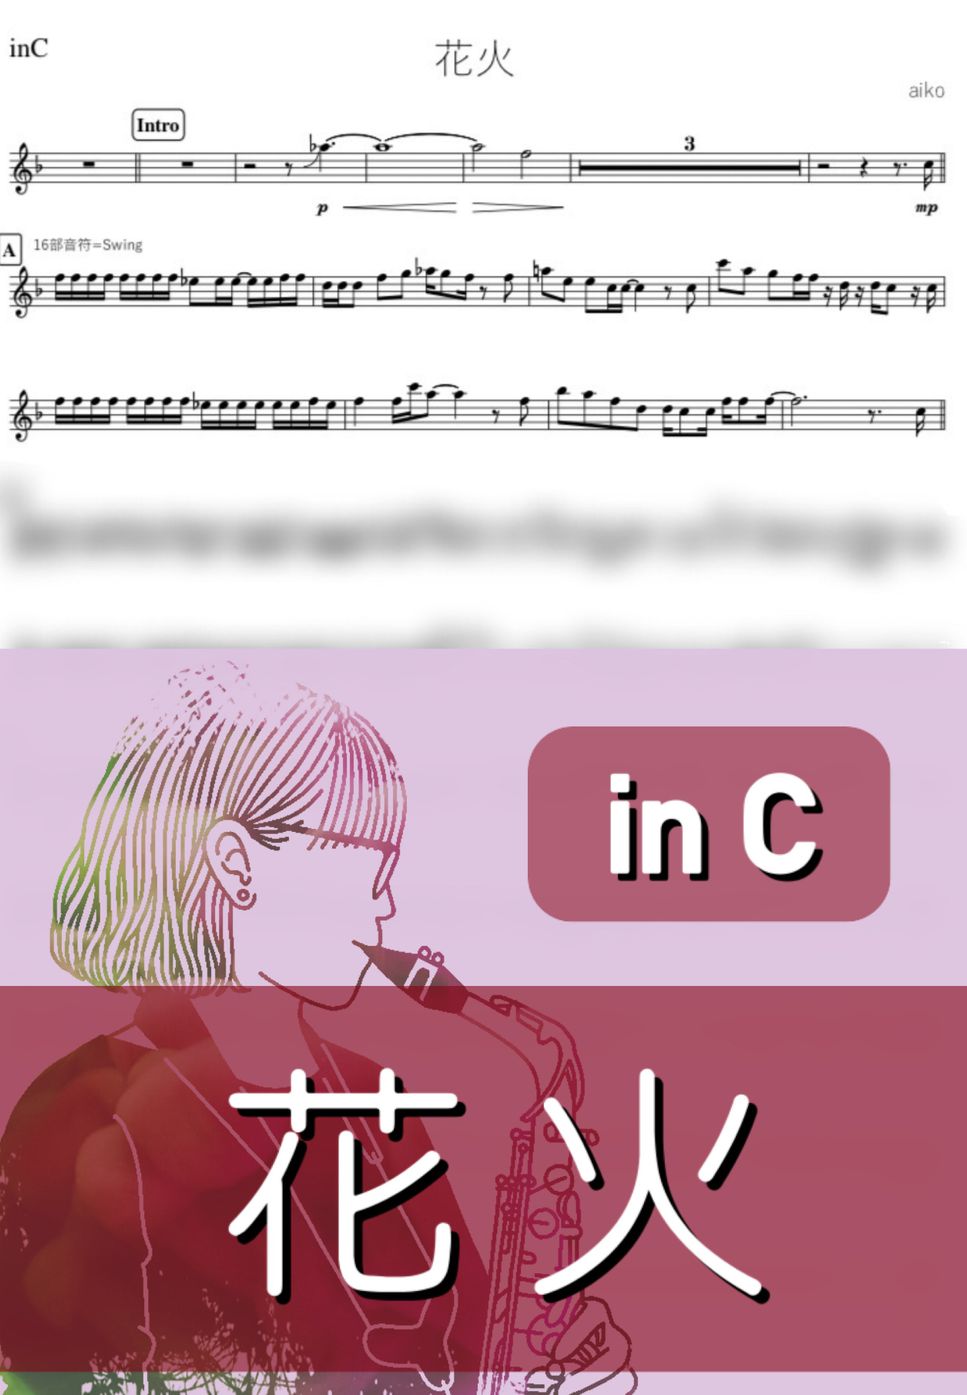 aiko - 花火 (C) by kanamusic